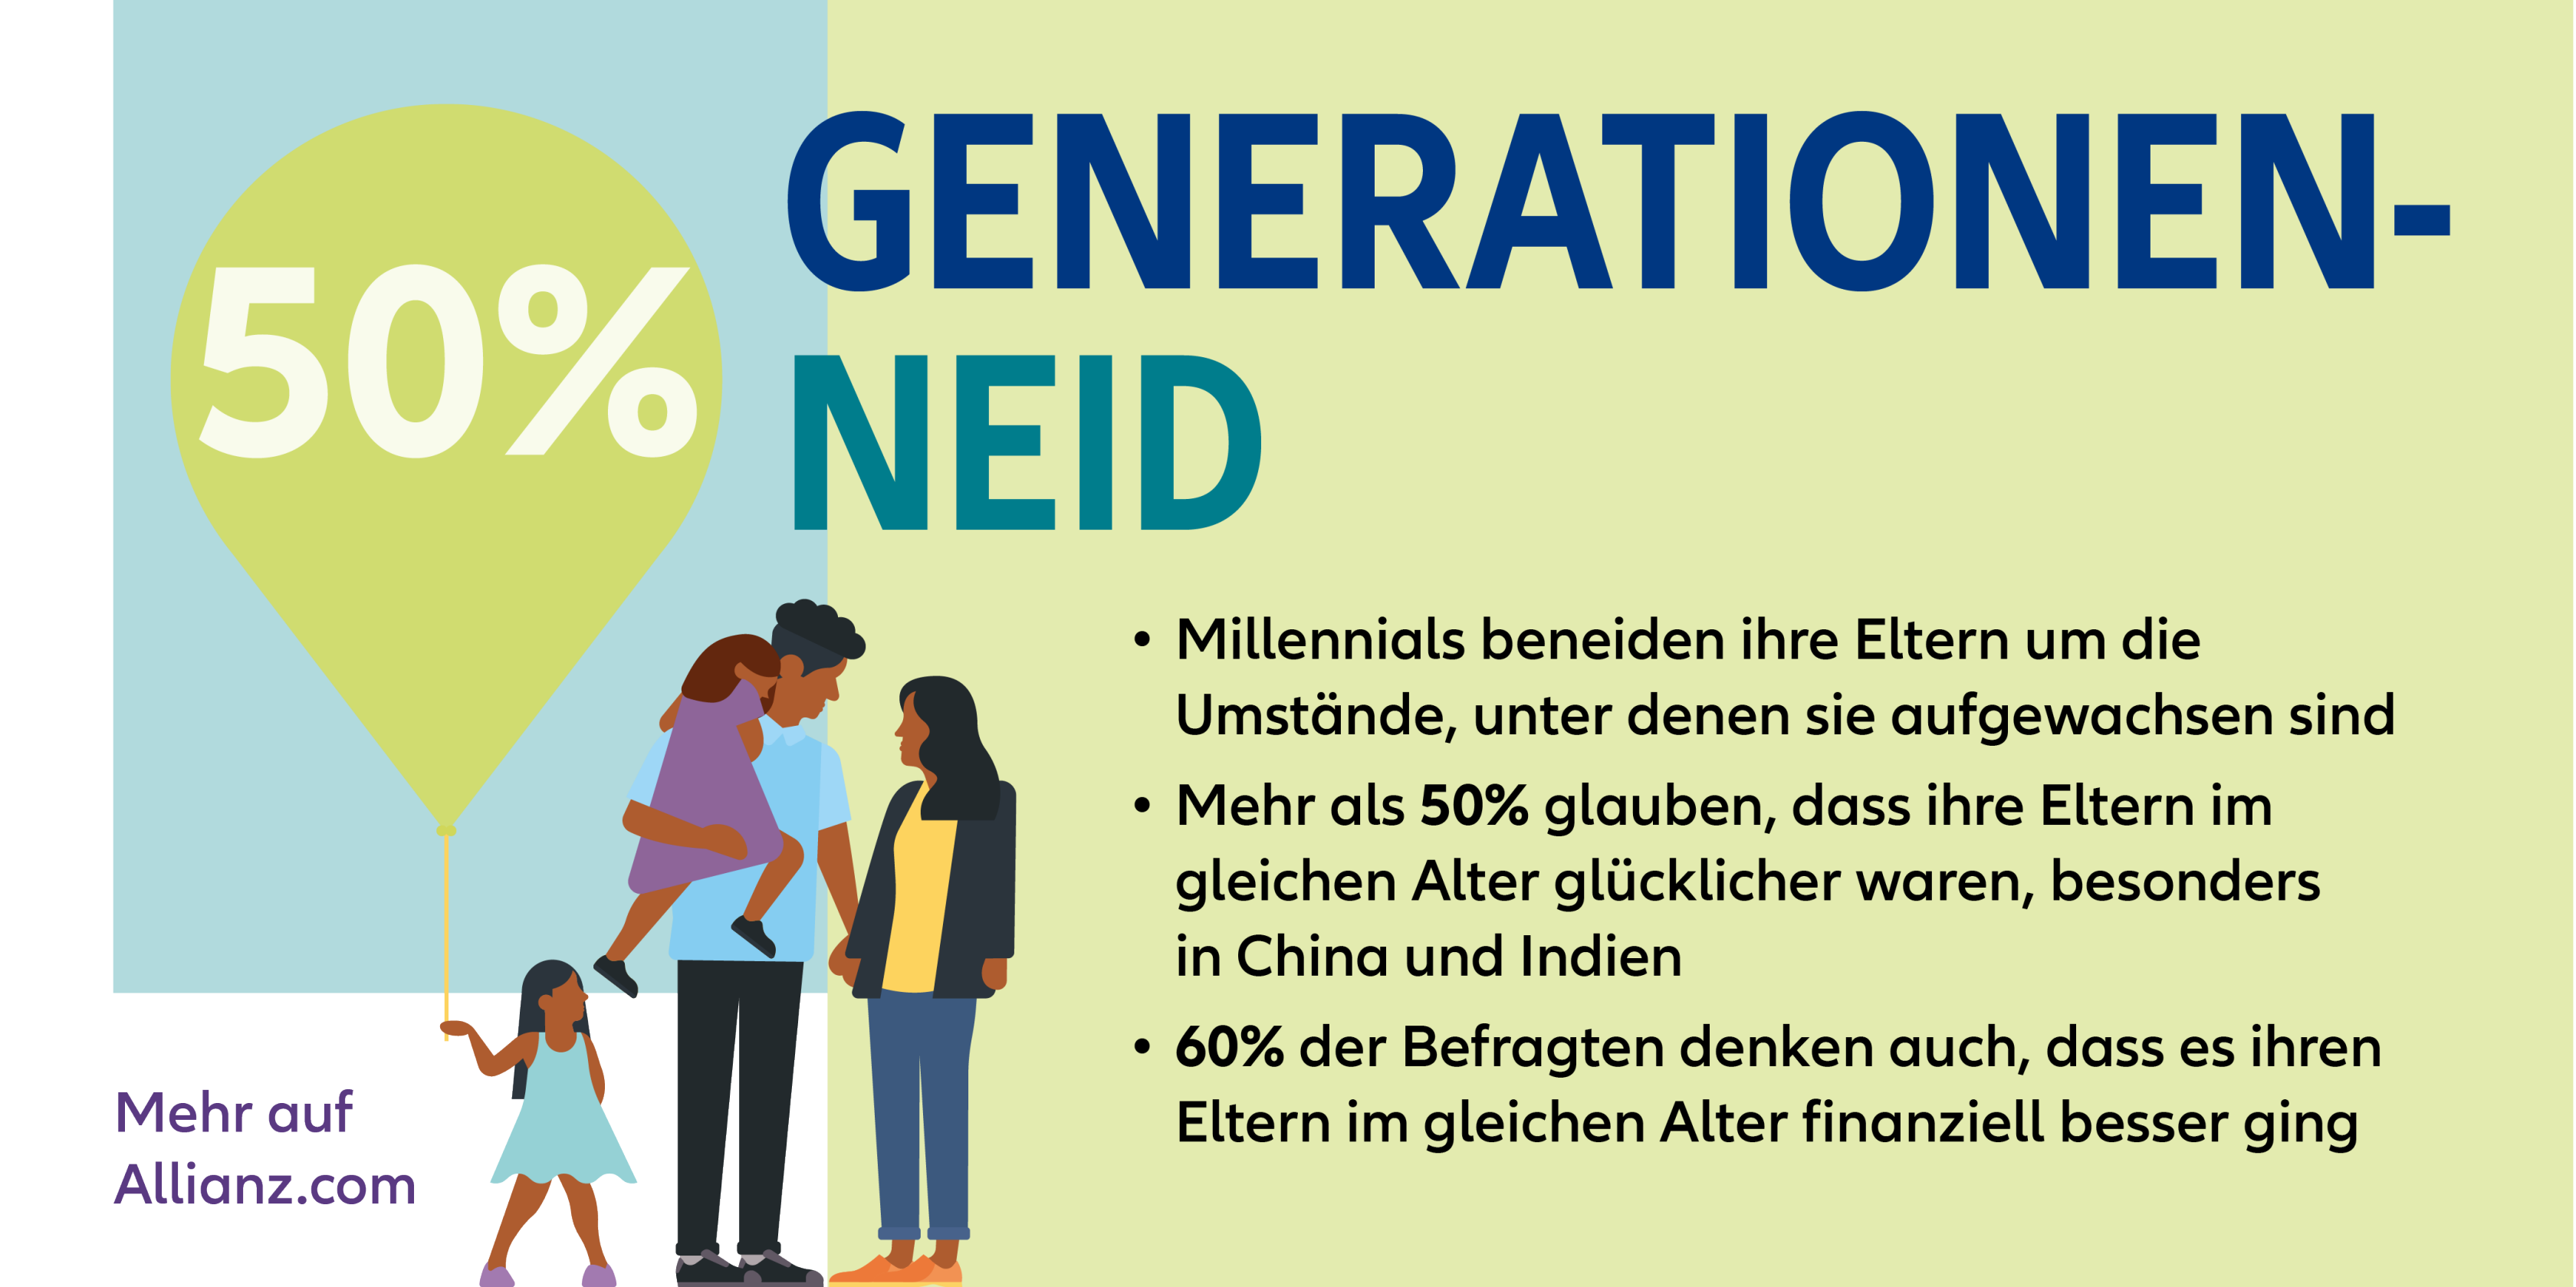 Generationen-Neid bei Millenials - Allianz Studie